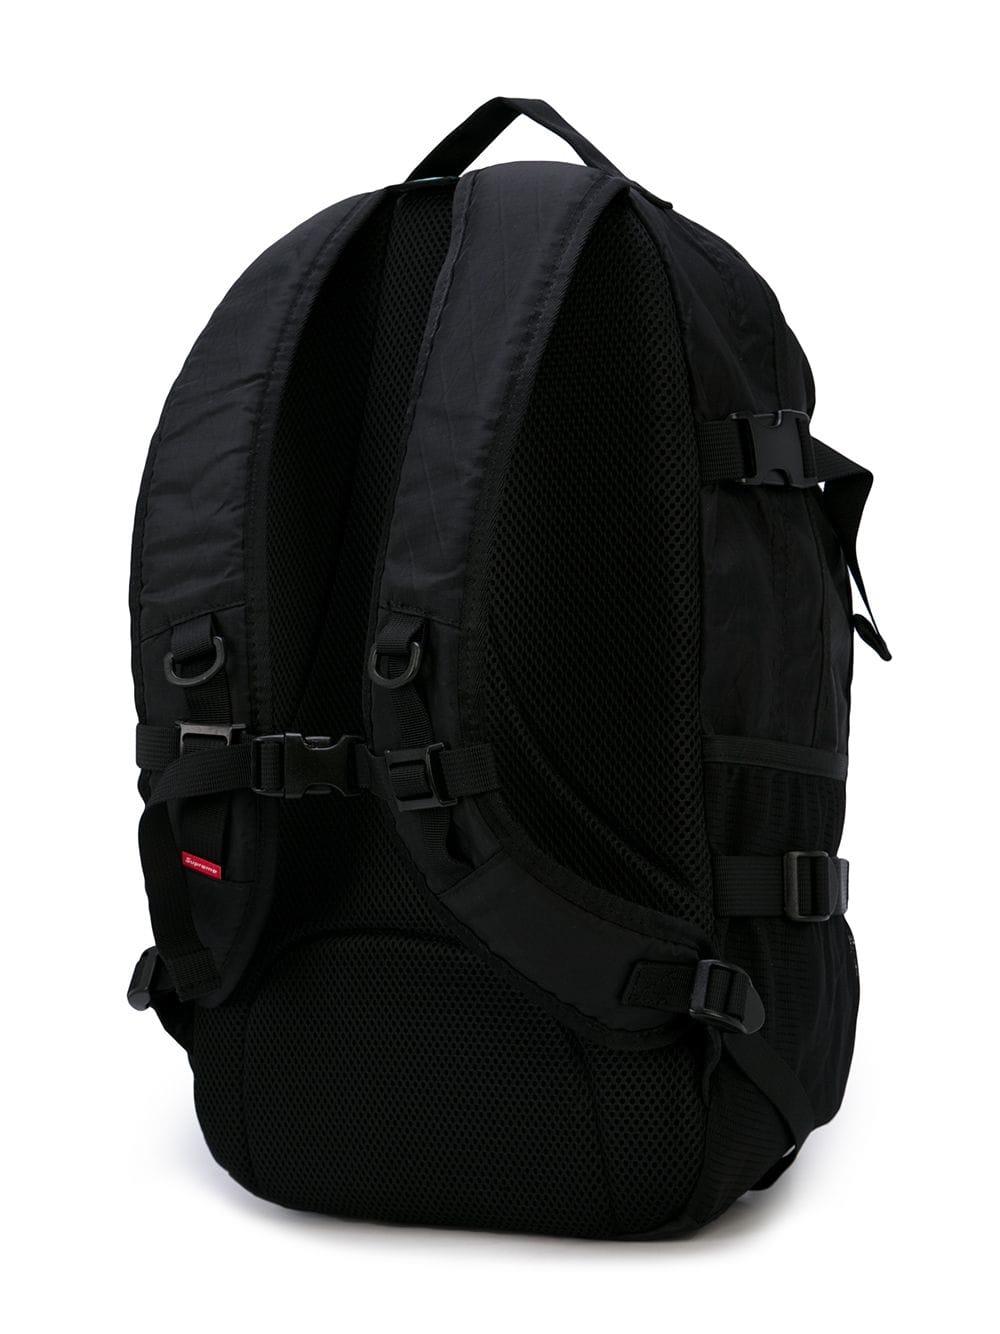 Supreme Backpack Fw 18